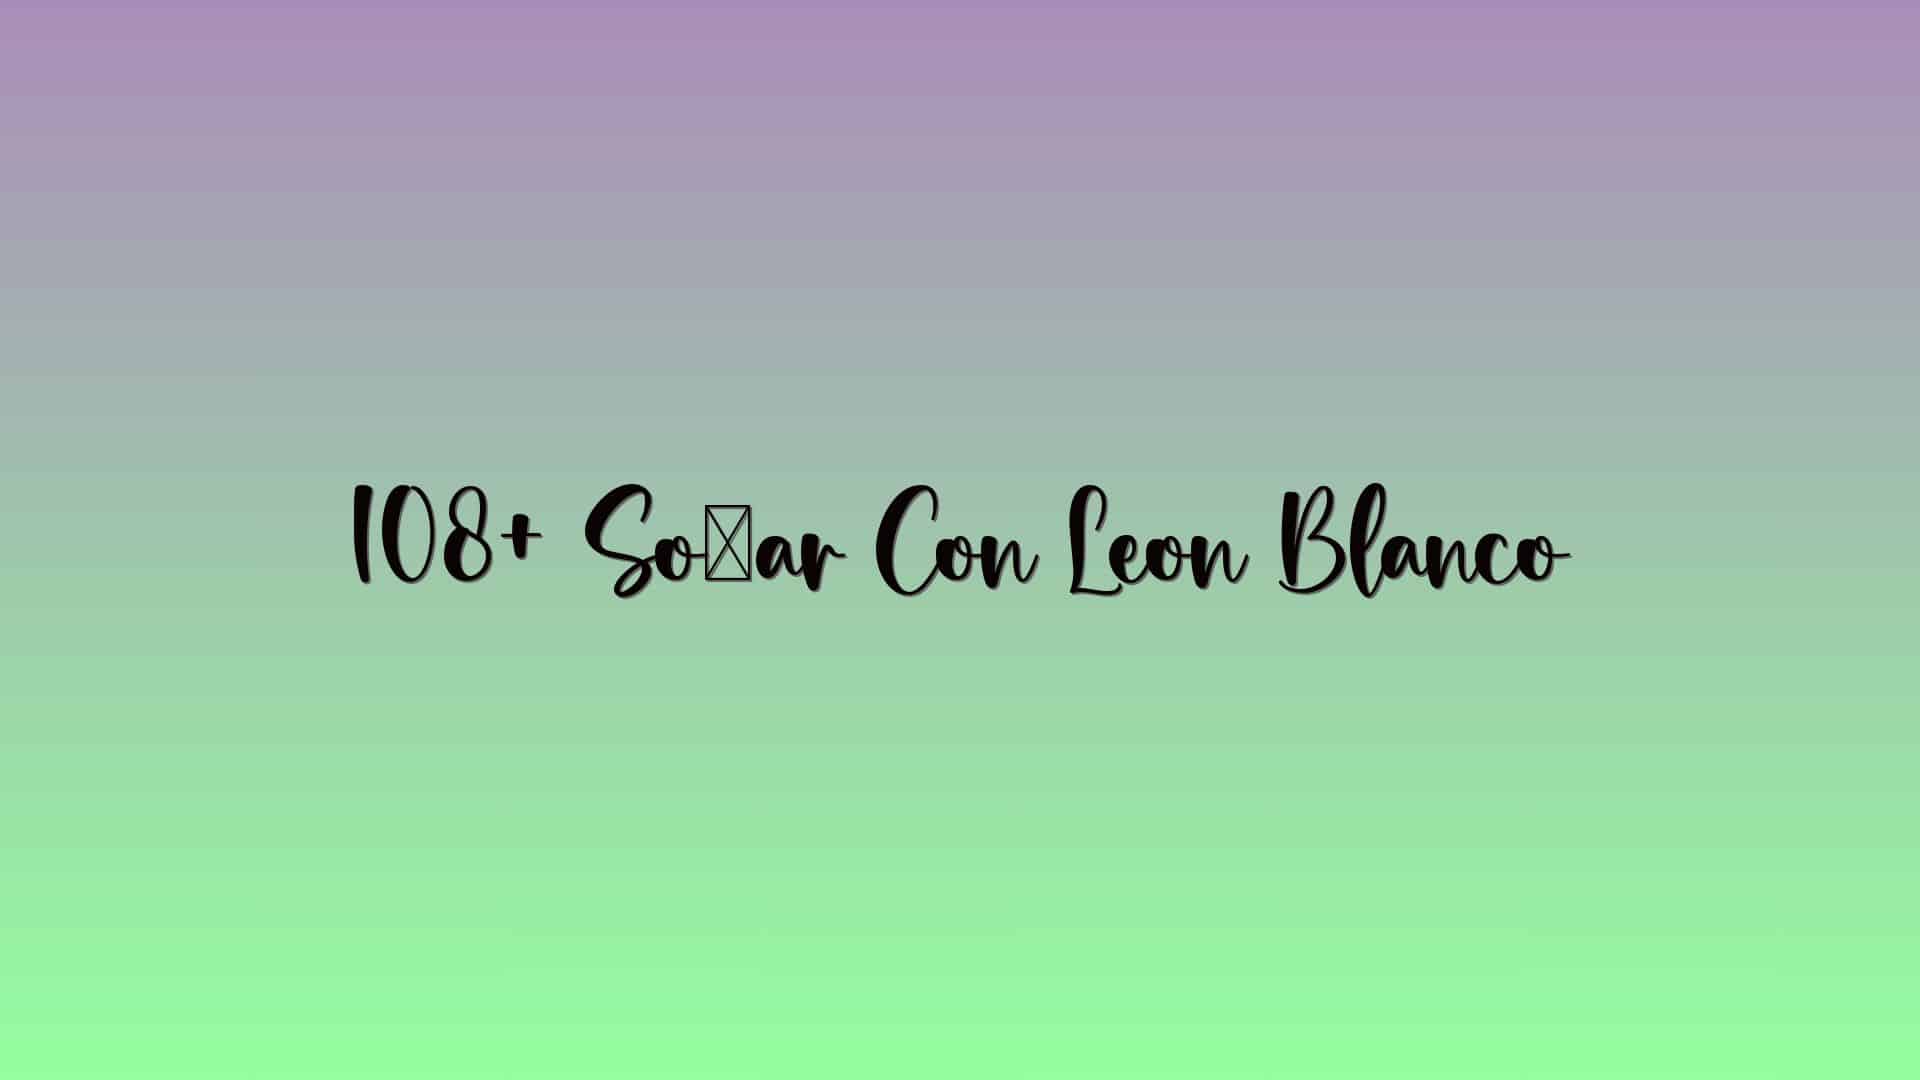 108+ Soñar Con Leon Blanco